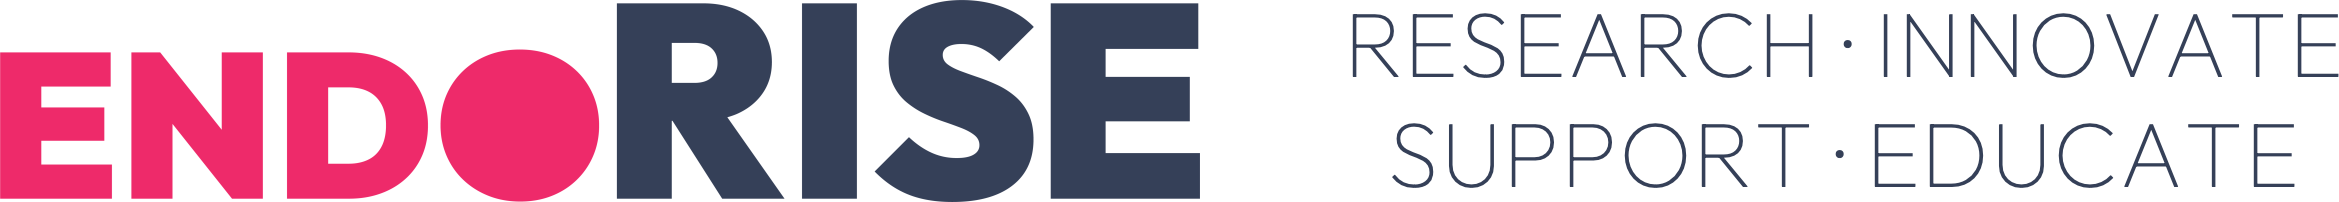 EndoRISE logo